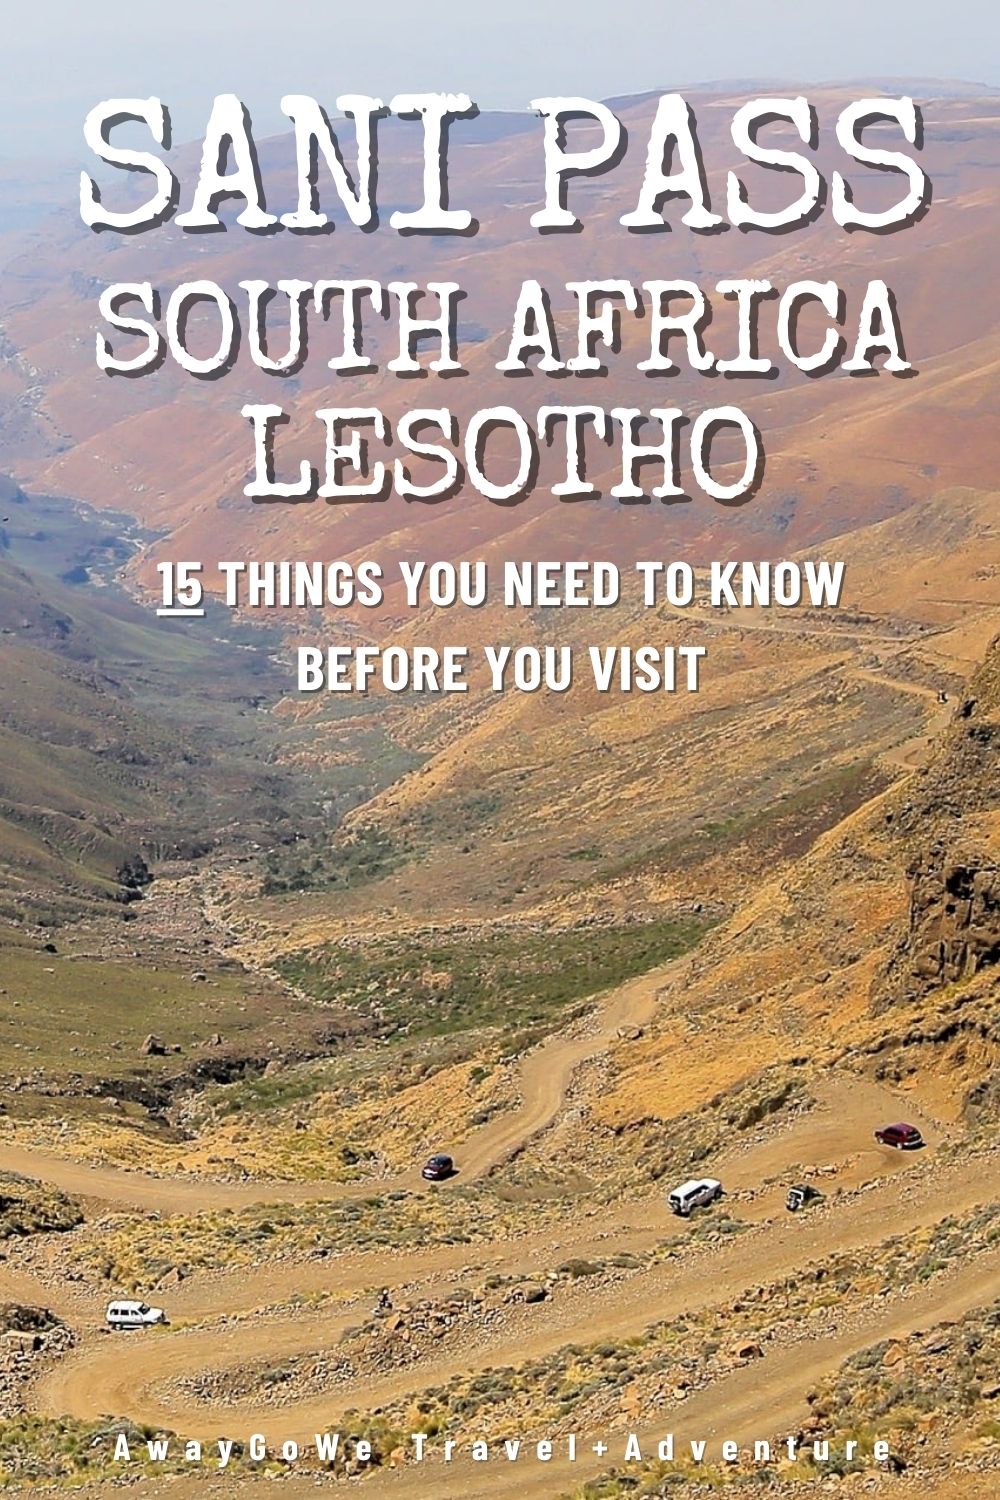 Sani Pass South Africa Lesohto